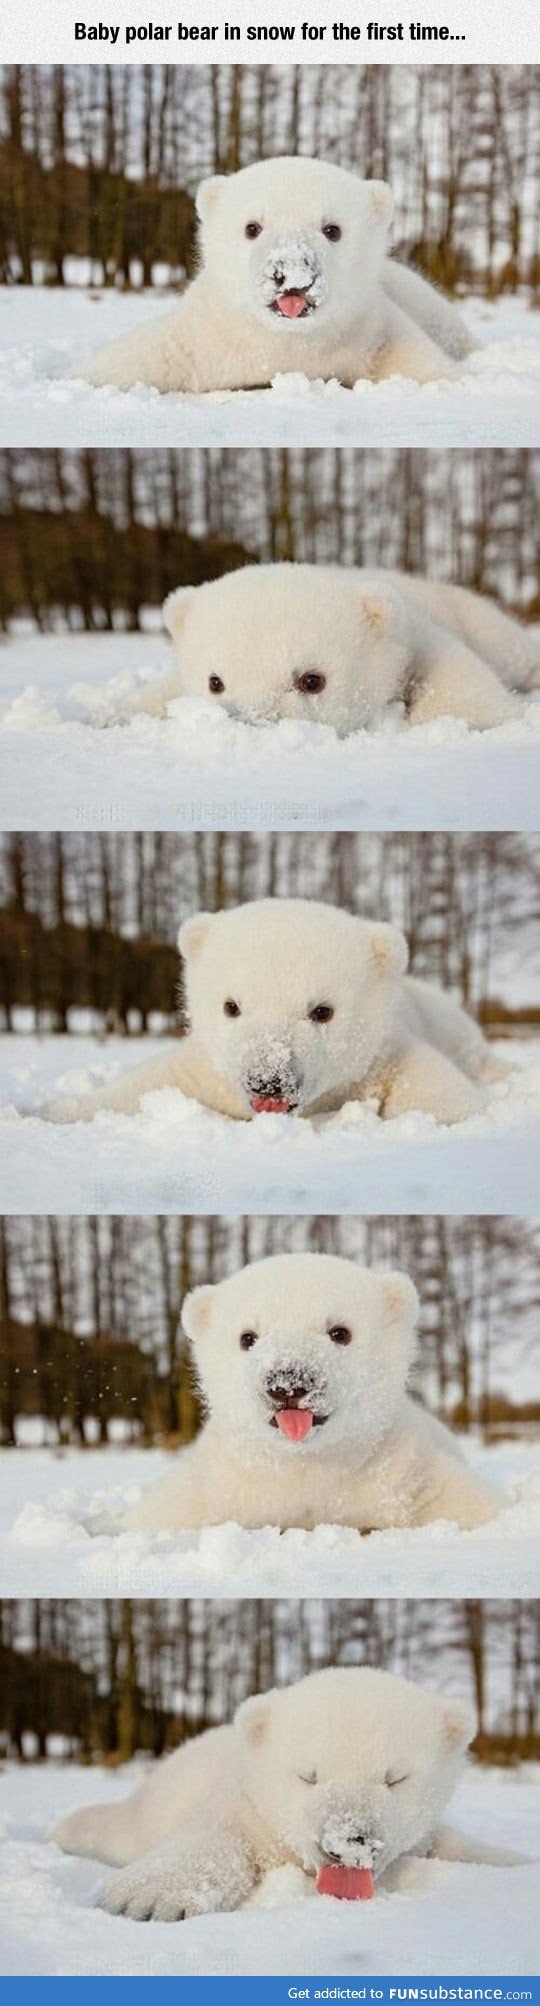 Baby Polar Bear Enjoying The Snow